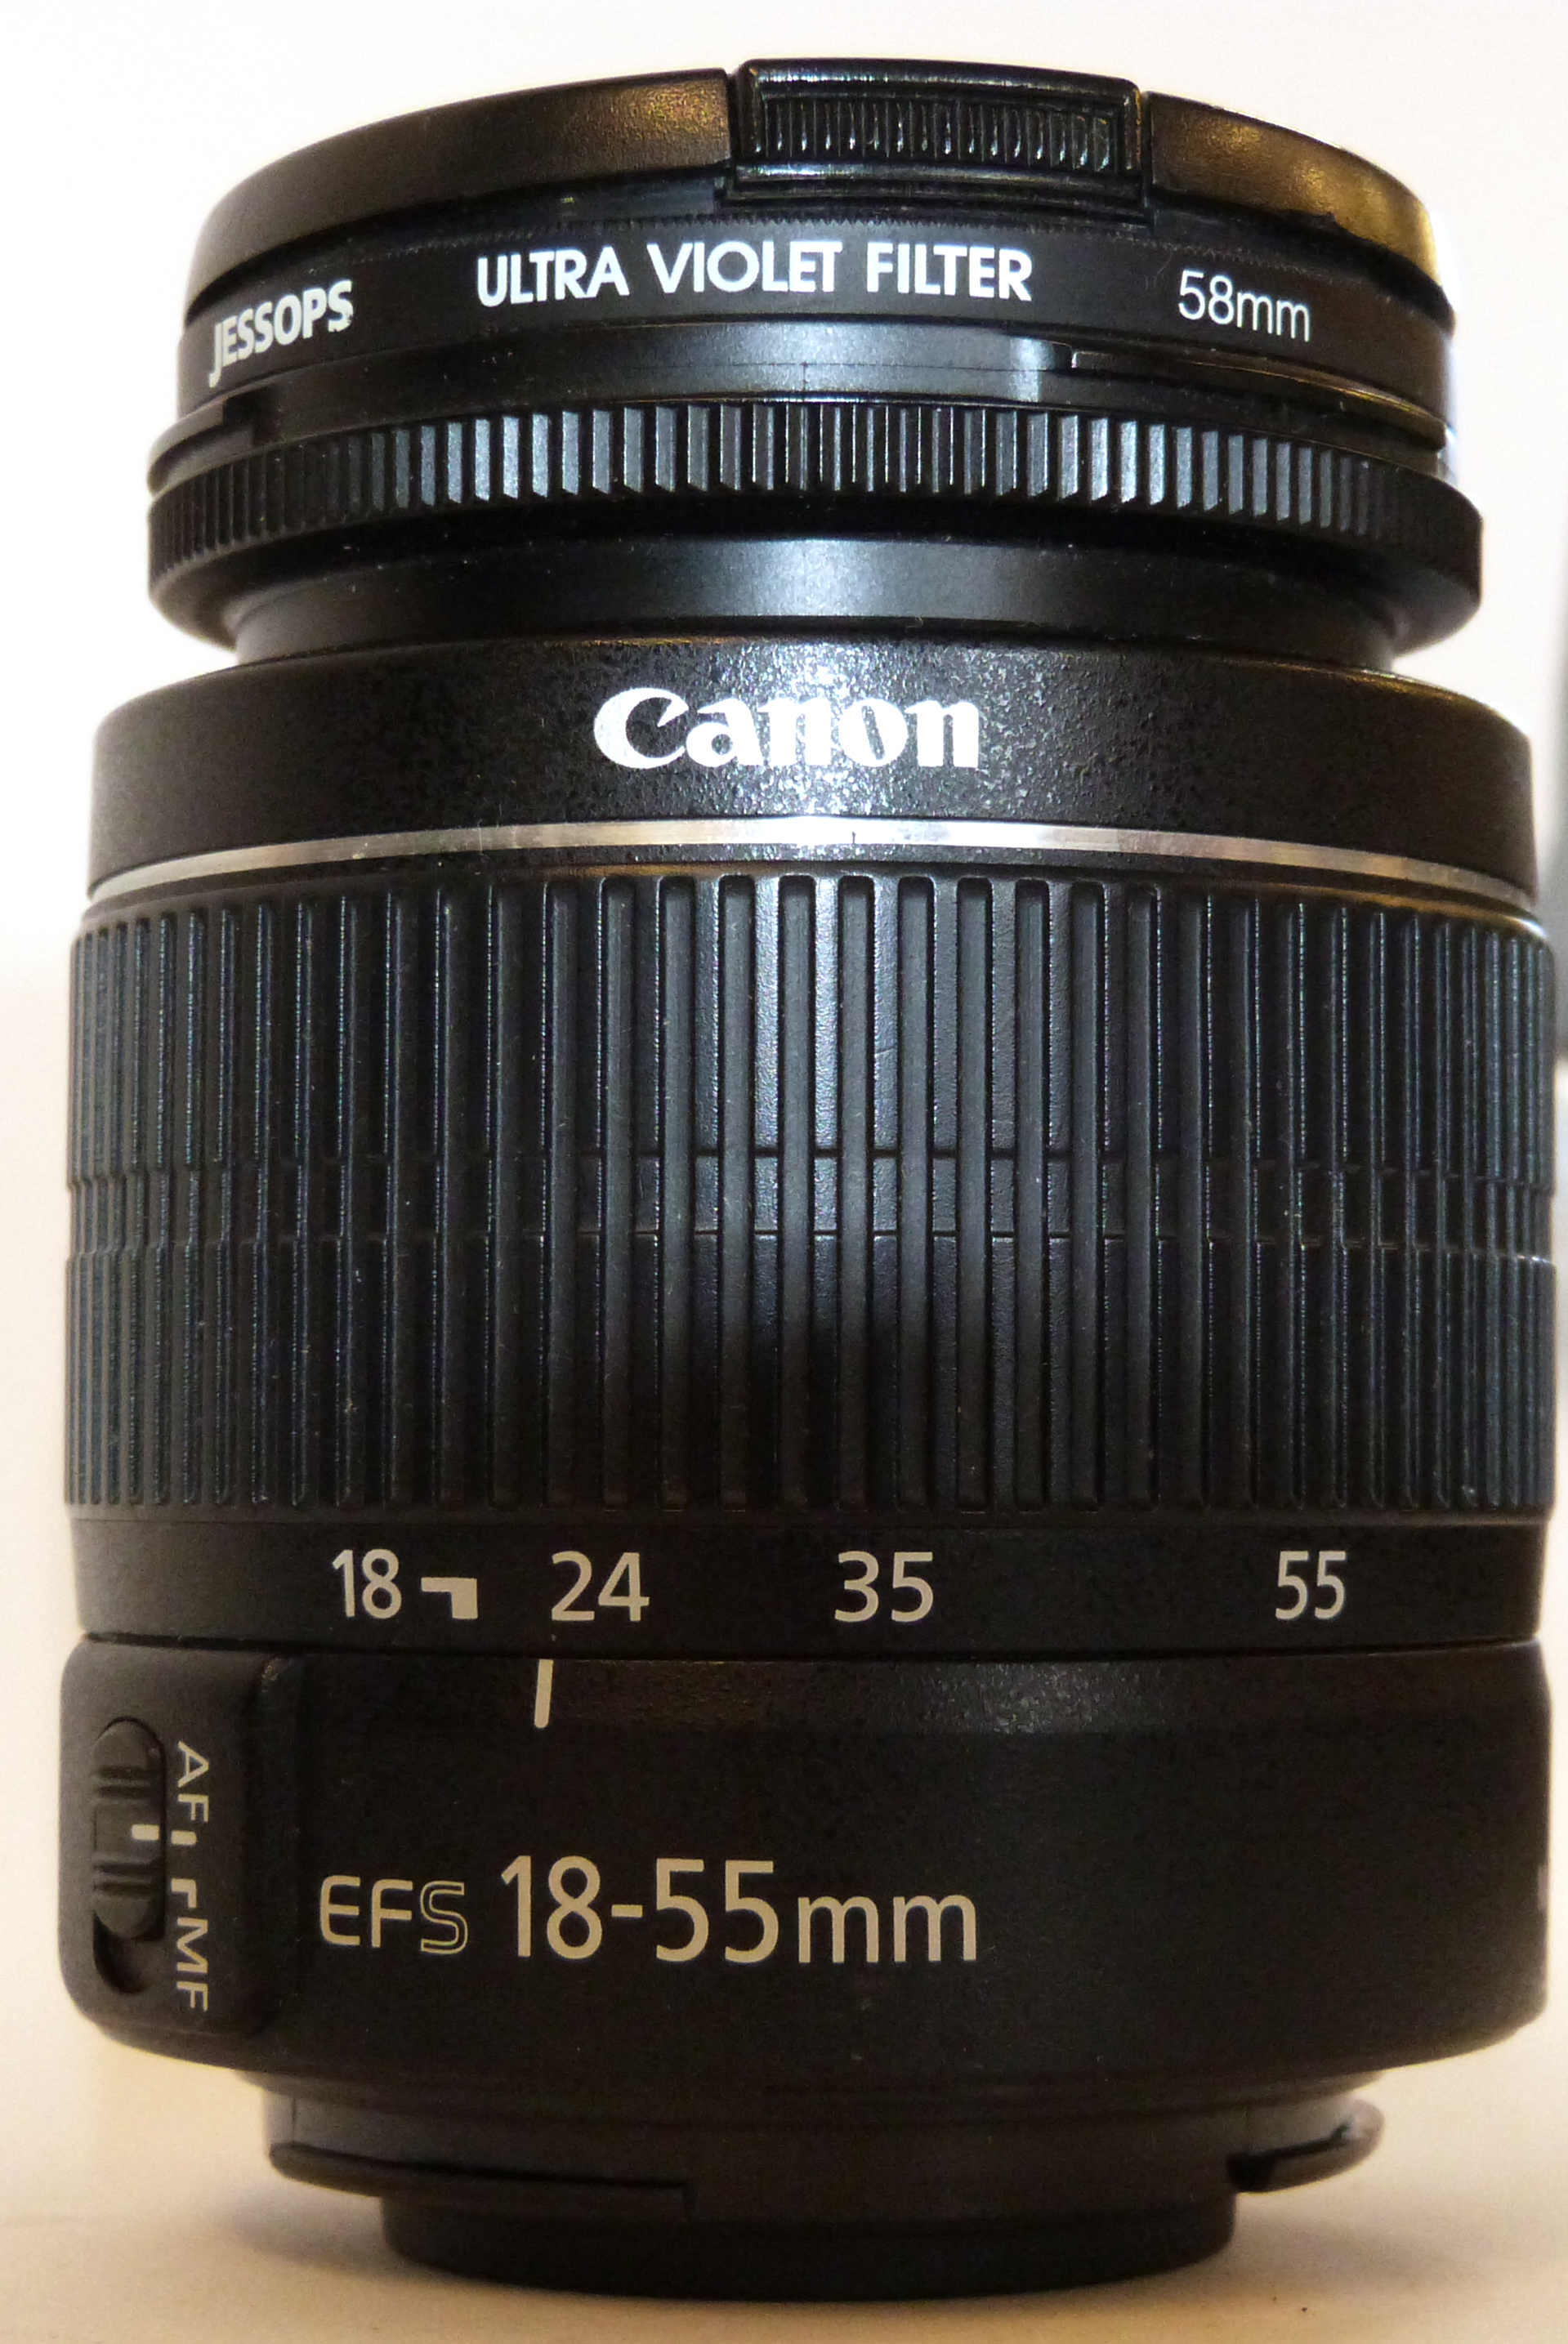 Canon EOS 1100 D digital camera together with Canon zoom lens EF-S 18-55mm, Tamron AF 70-300mm lens, - Image 5 of 6